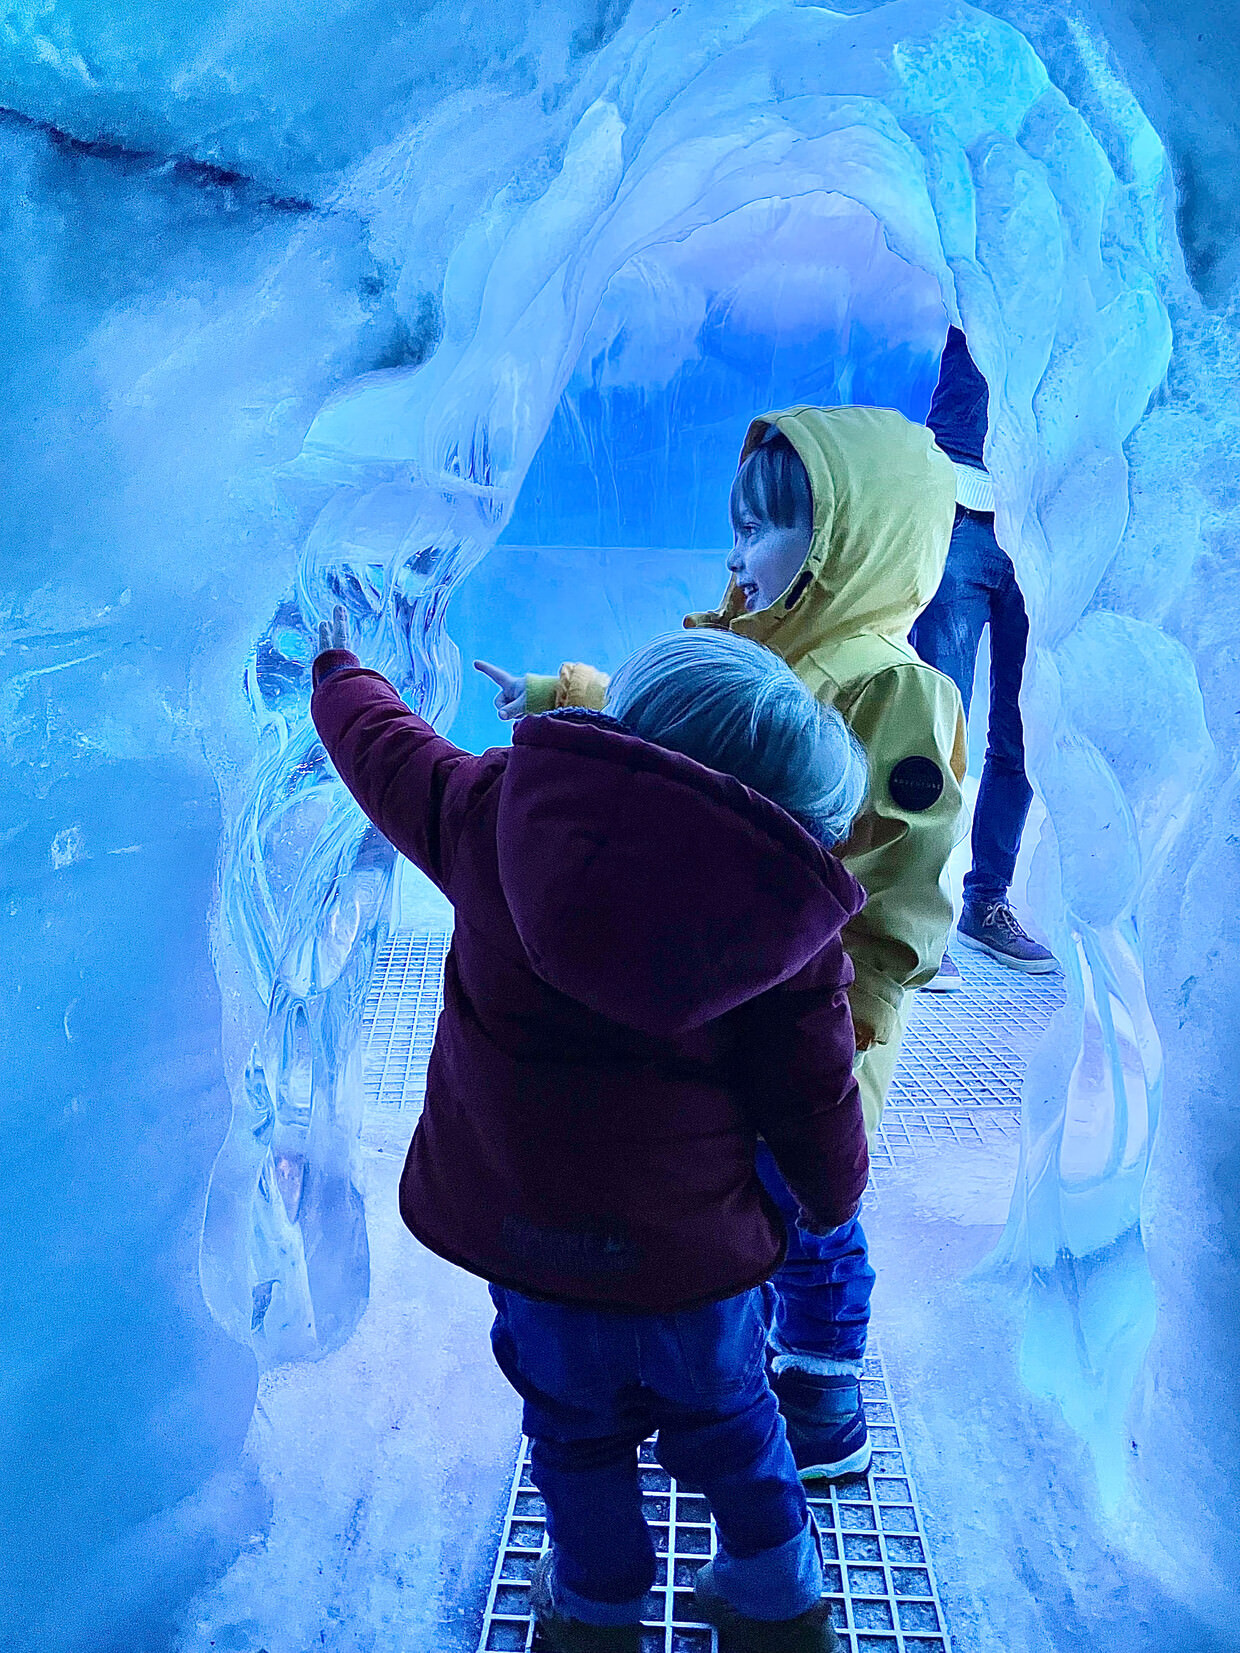 The boys enjoying the ice cave